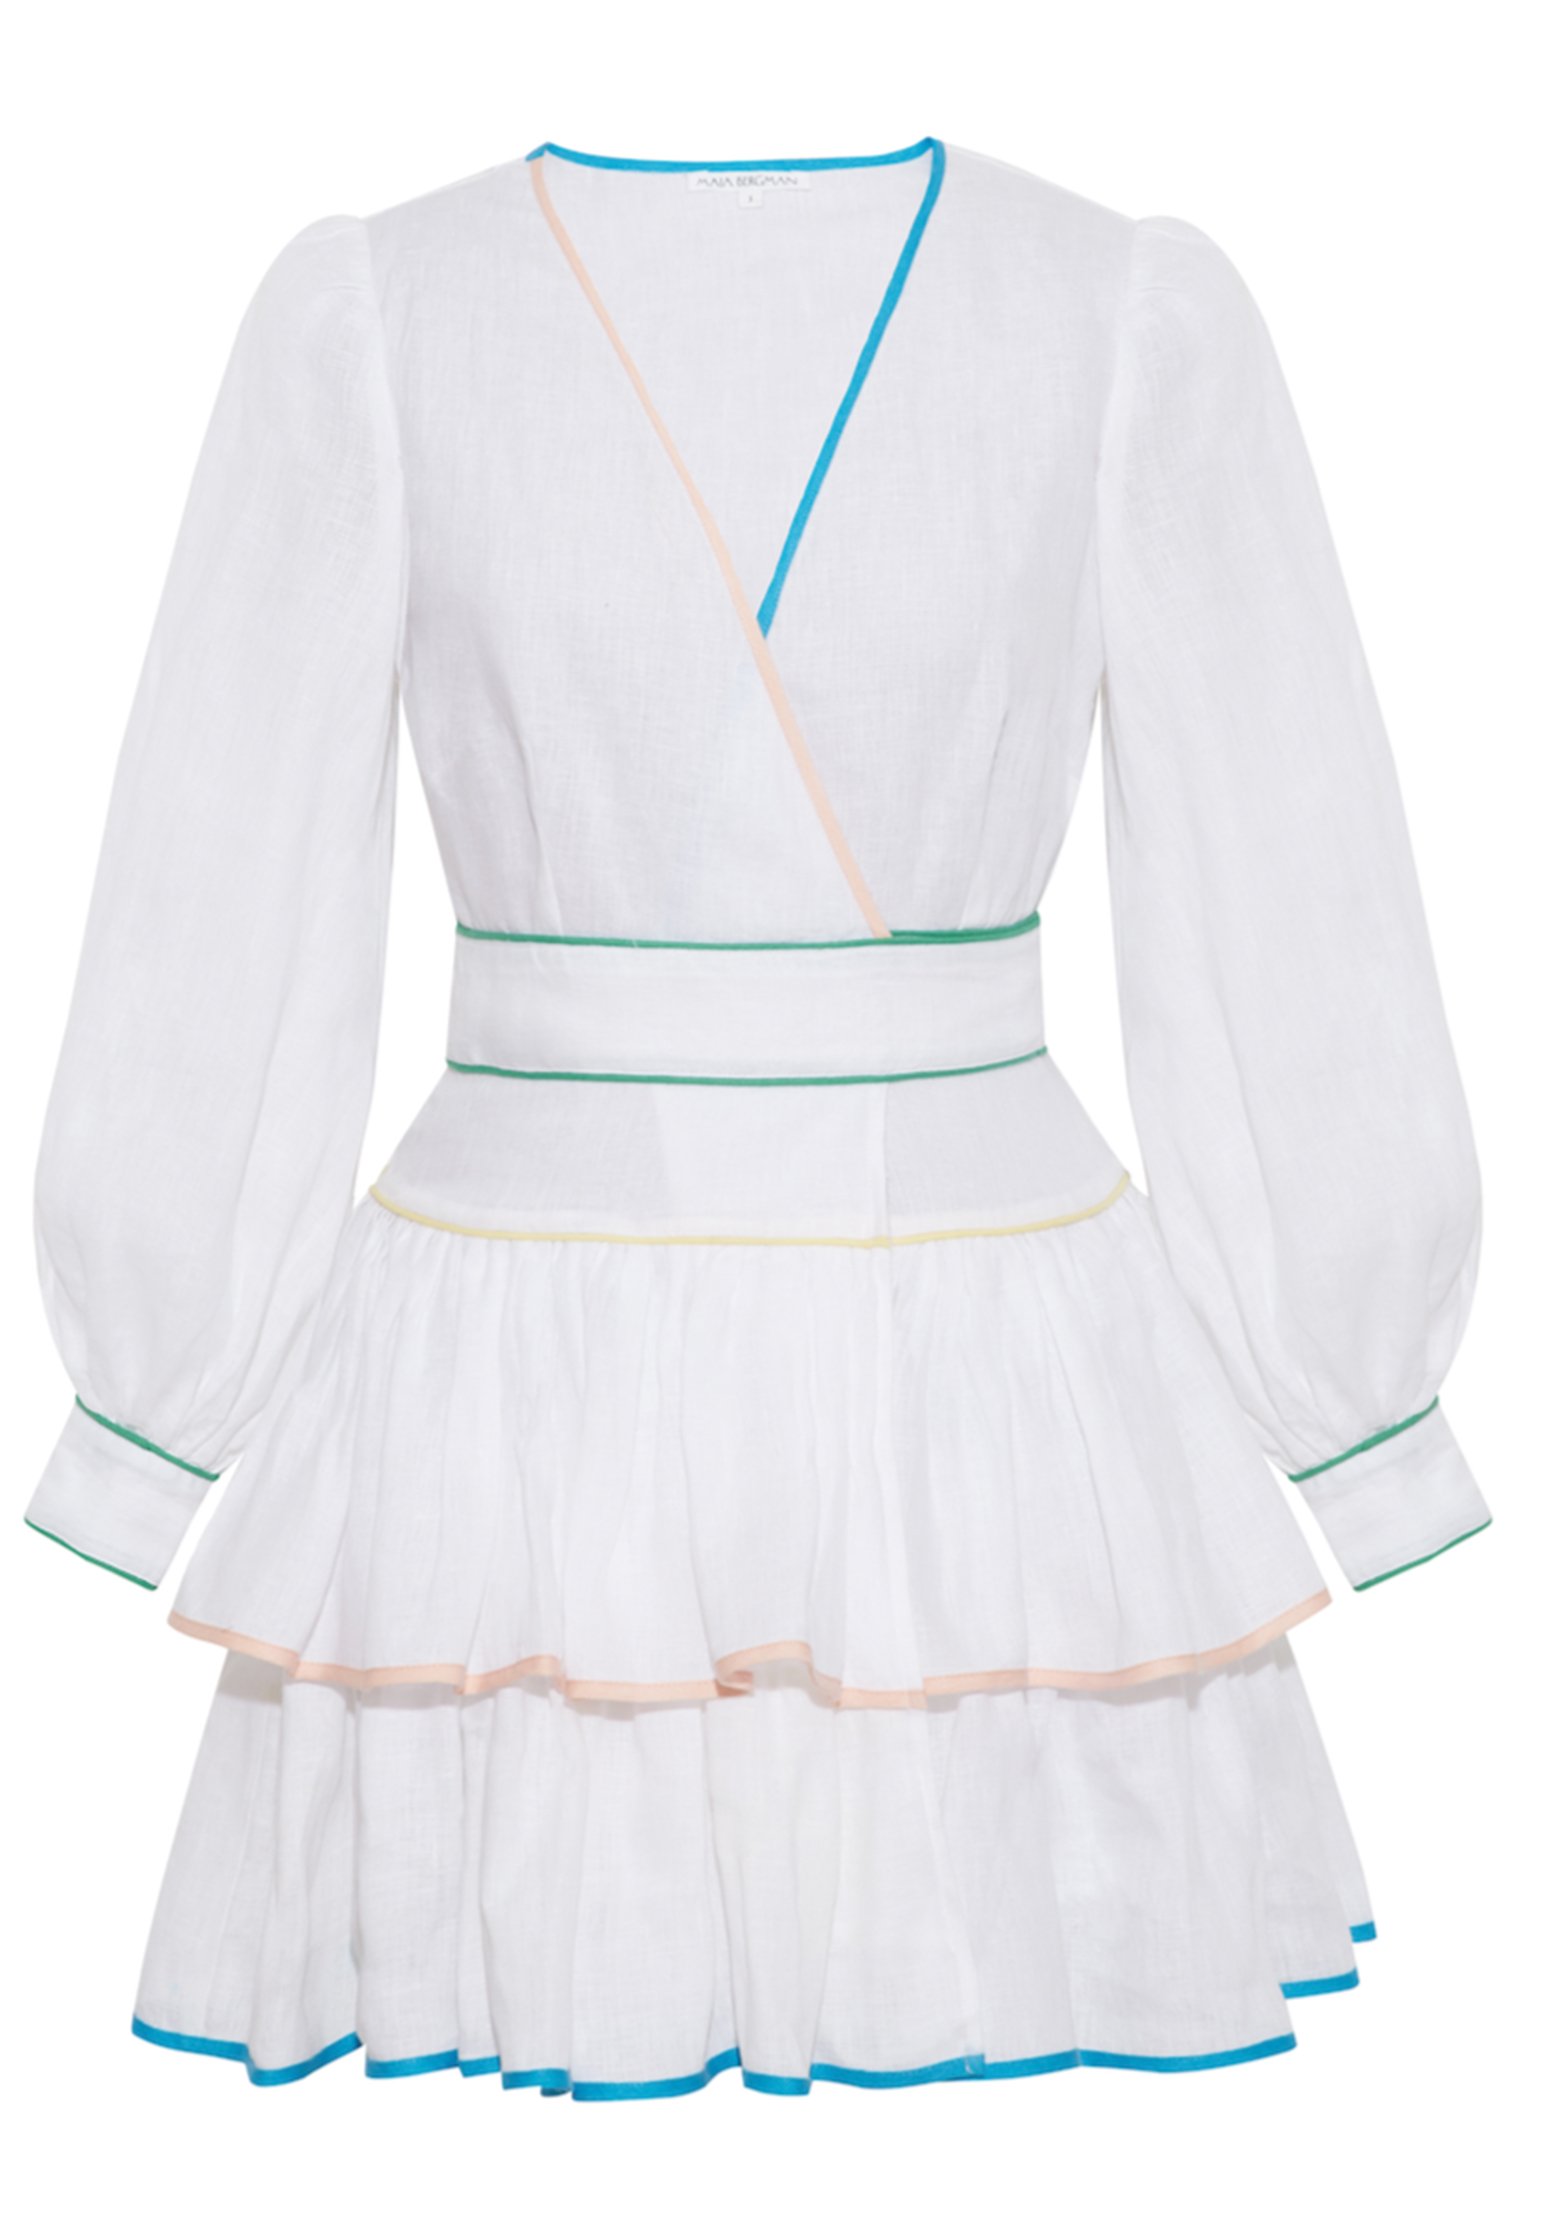 Dress MAIA BERGMAN Color: multicolor (Code: 2251) in online store Allure